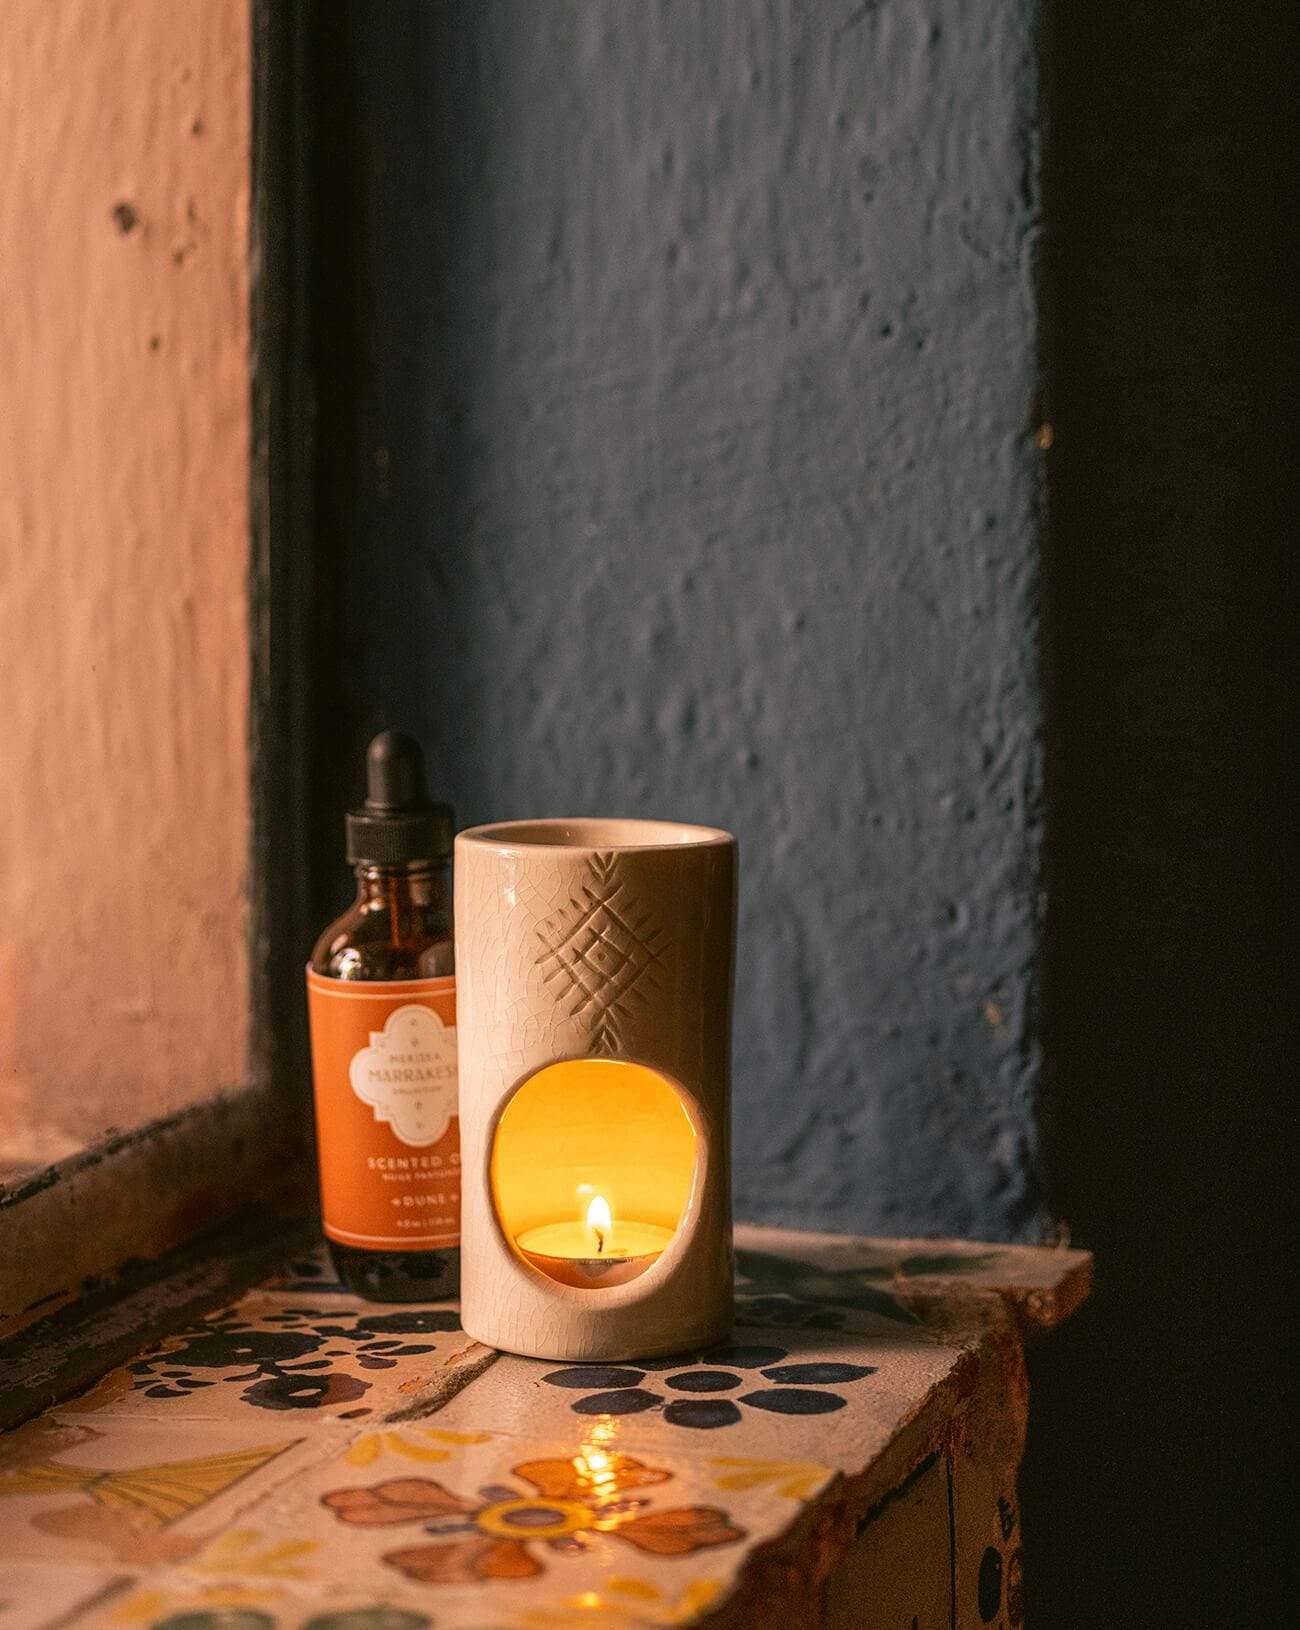 bottle of dune scented oil burner next to white ceramic candle holder on window ledge 